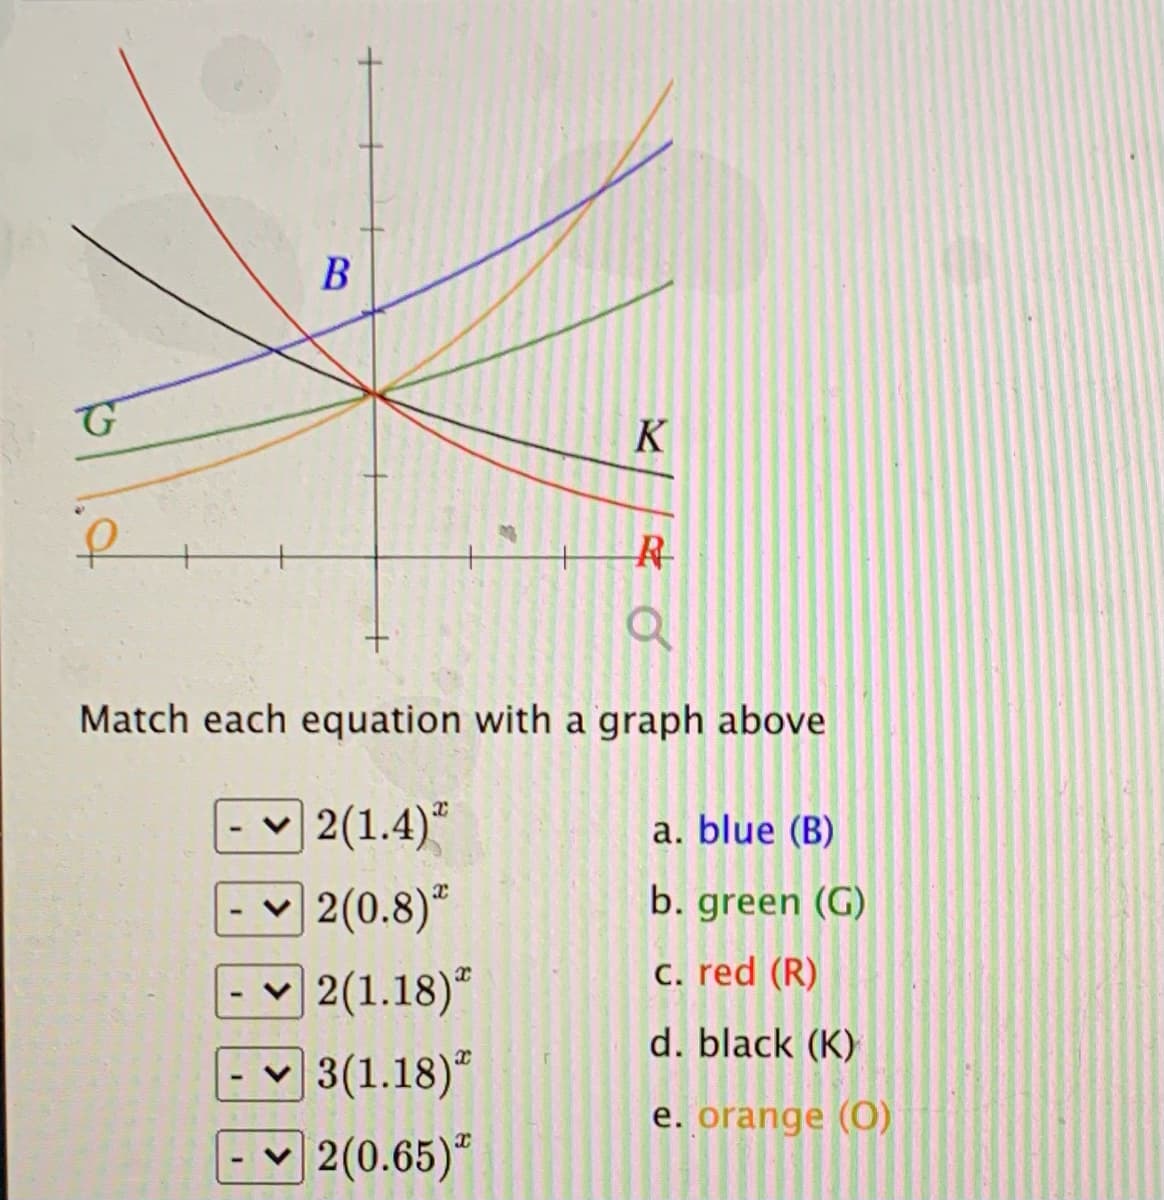 K
Match each equation with a graph above
| 2(1.4)"
| 2(0.8)*
a. blue (B)
b. green (G)
2(1.18)"
C. red (R)
d. black (K)
|3(1.18)"
e. orange (O)
]2(0.65)*
